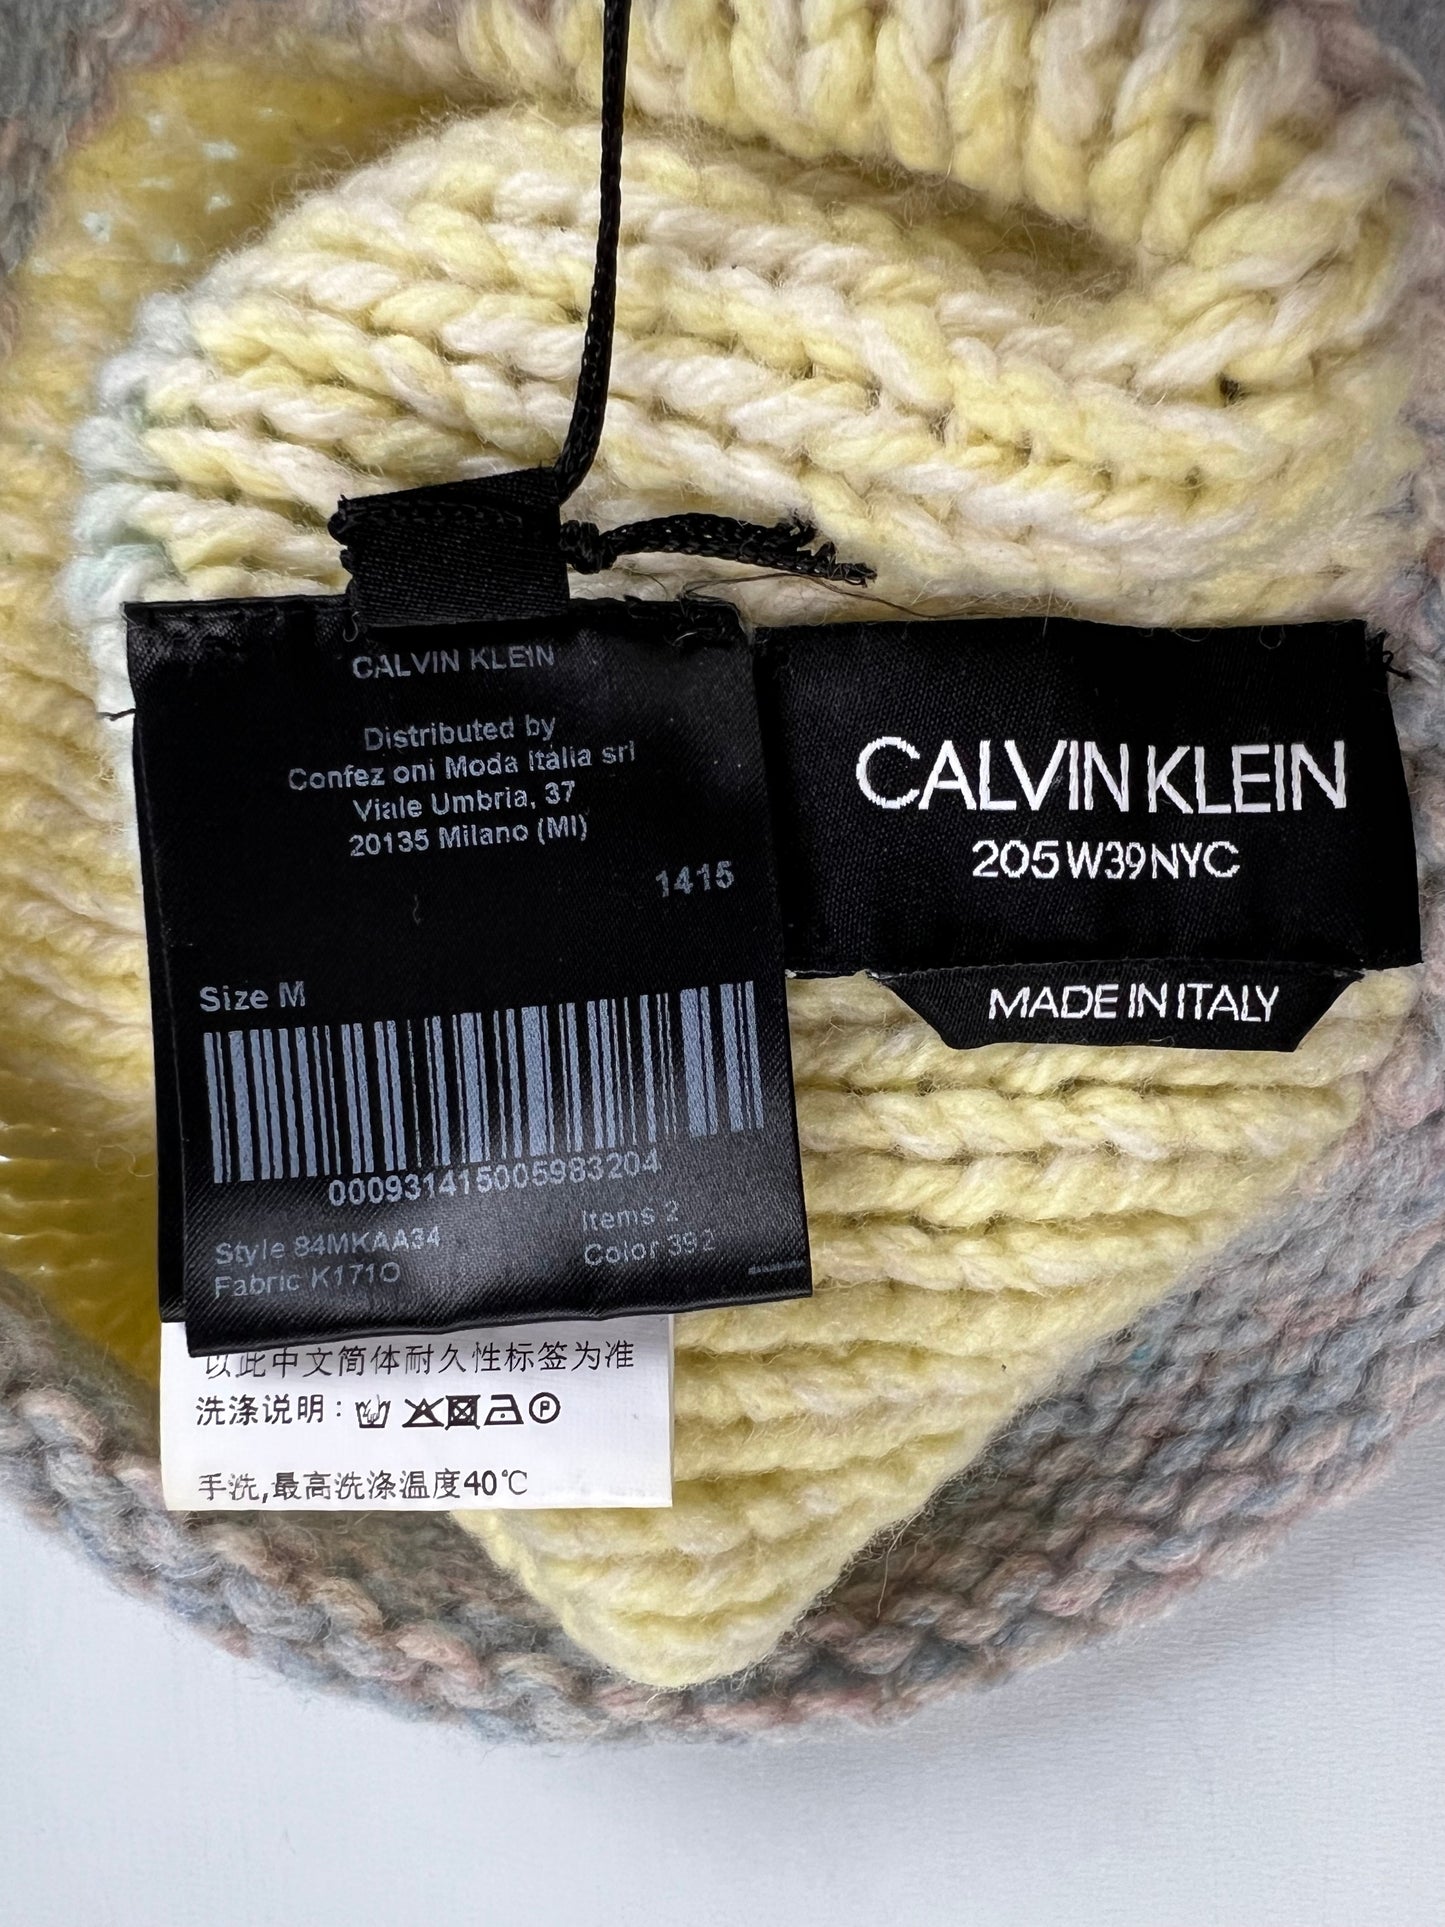 Calvin Klein 205w39nyc by raf simons knitted balaclavca Ski-Mask  SZ:M